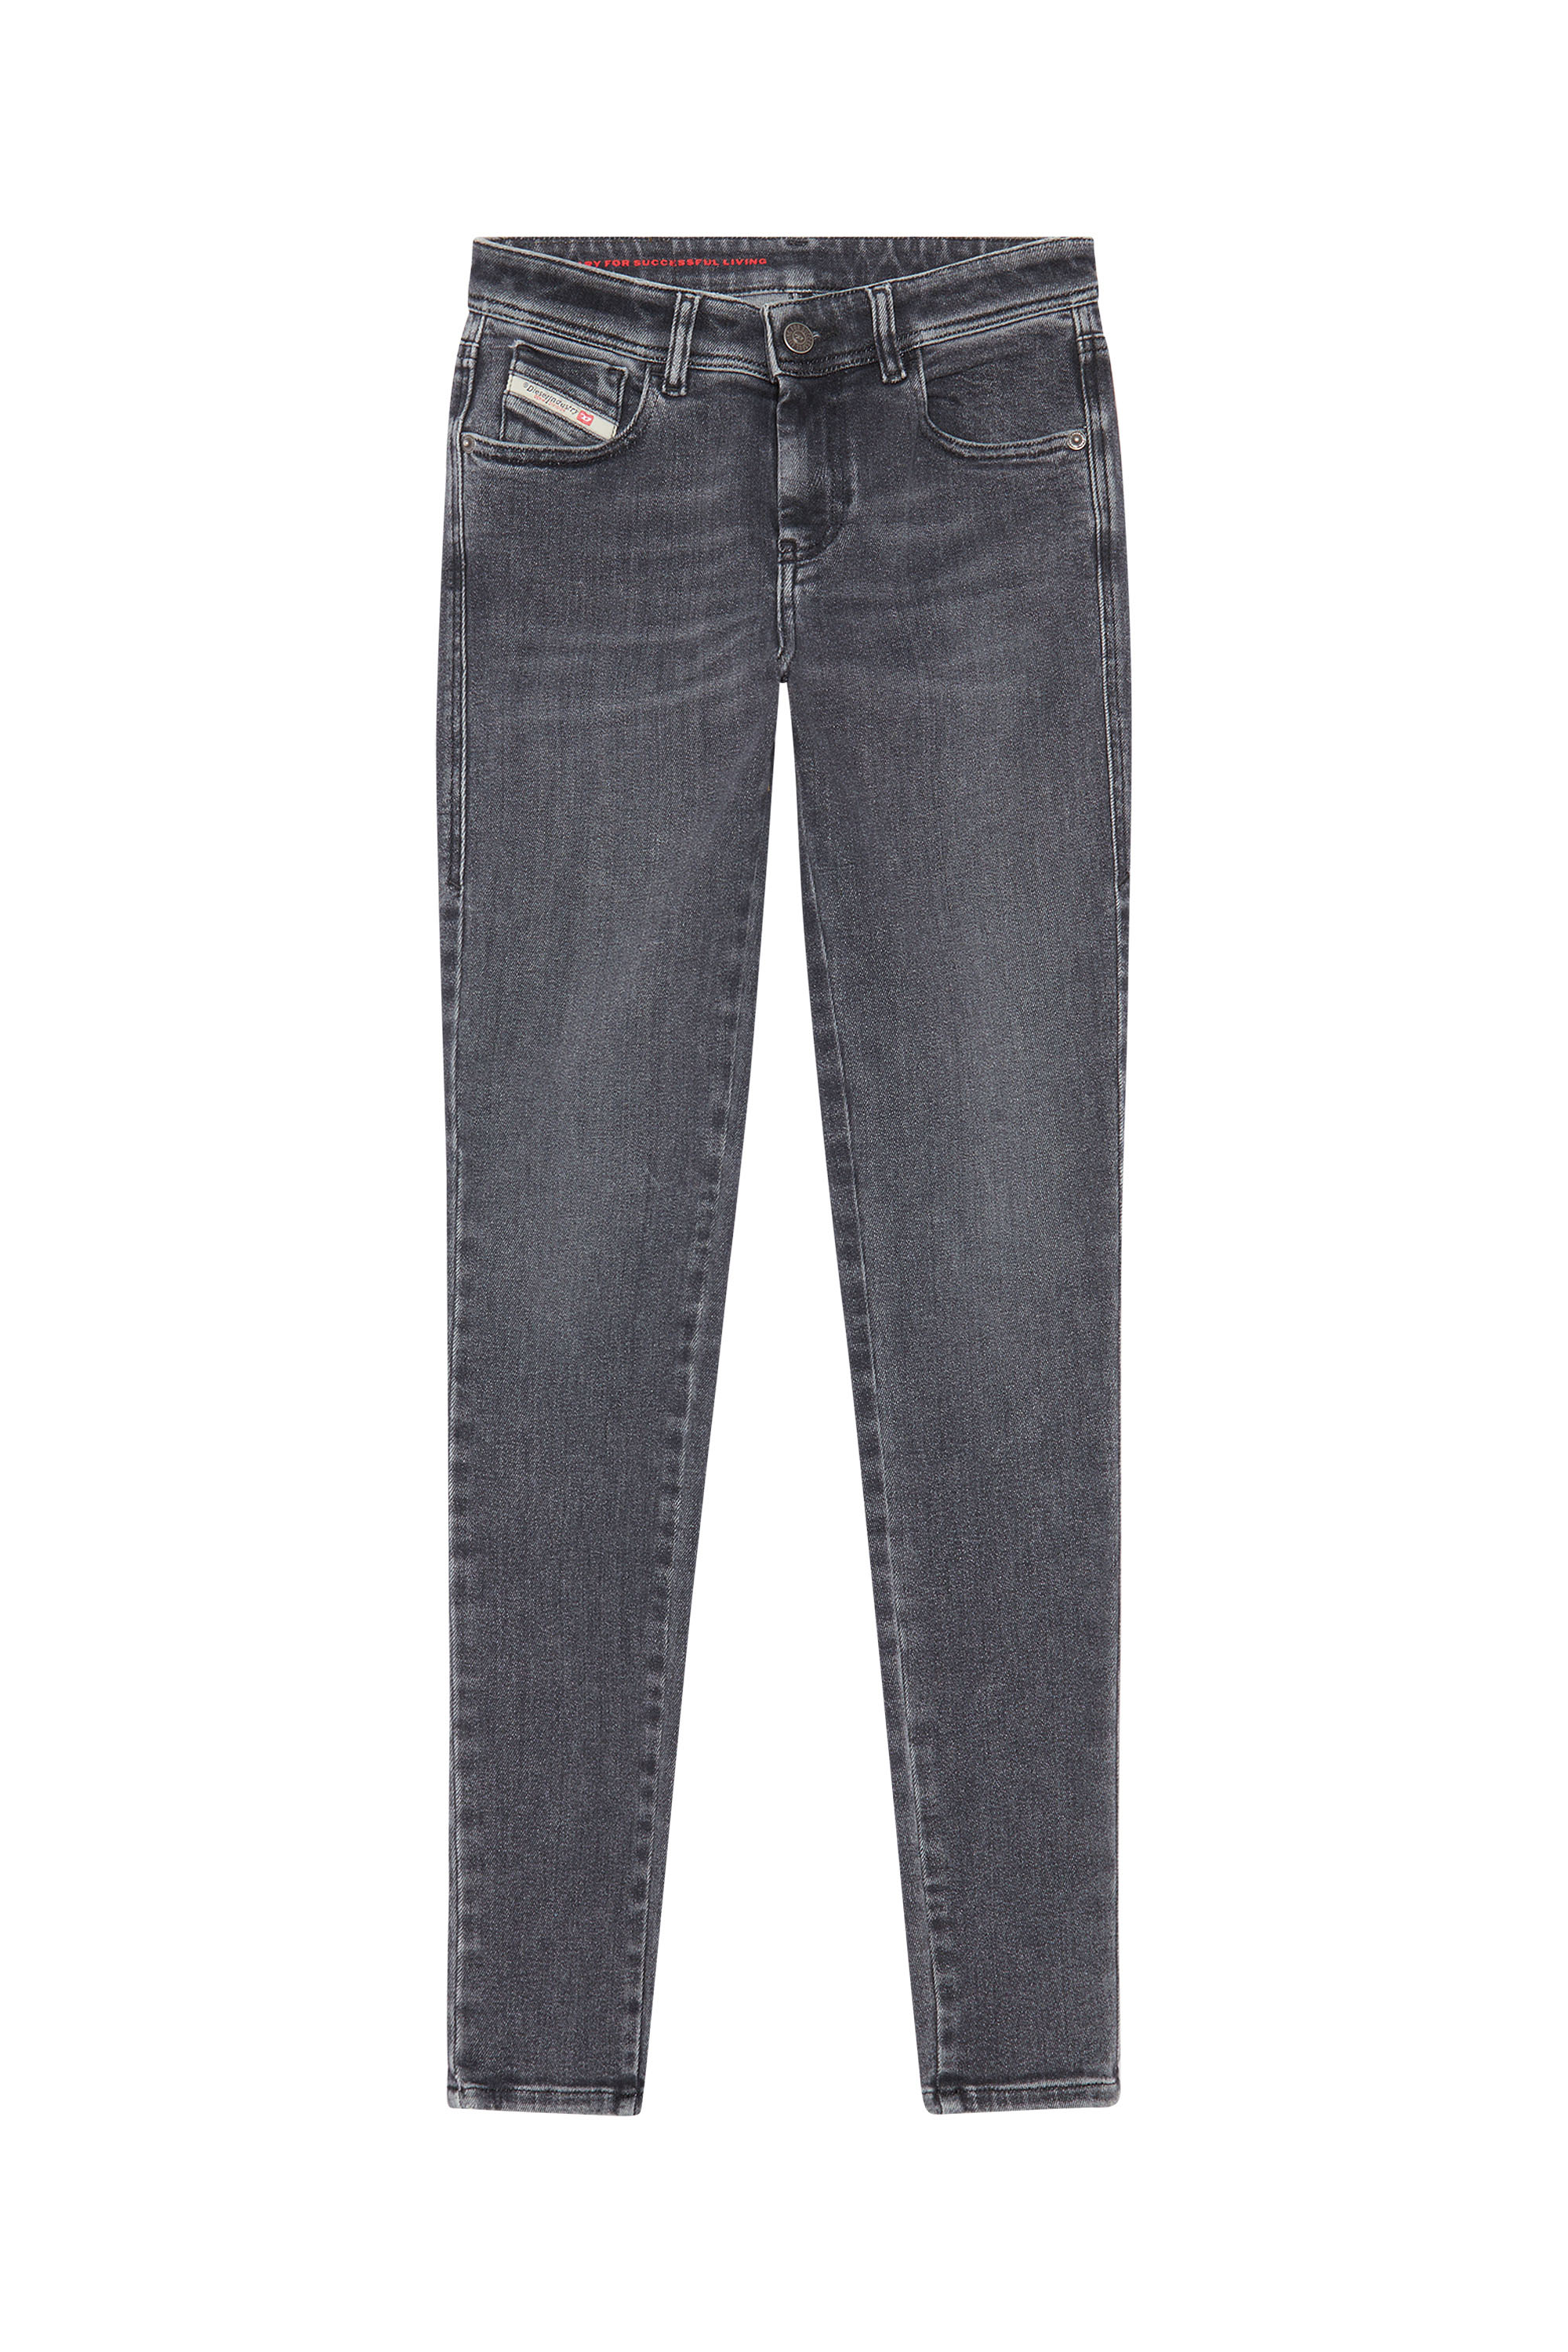 2017 Slandy 09D61 Super skinny Jeans, Black/Dark grey - Jeans